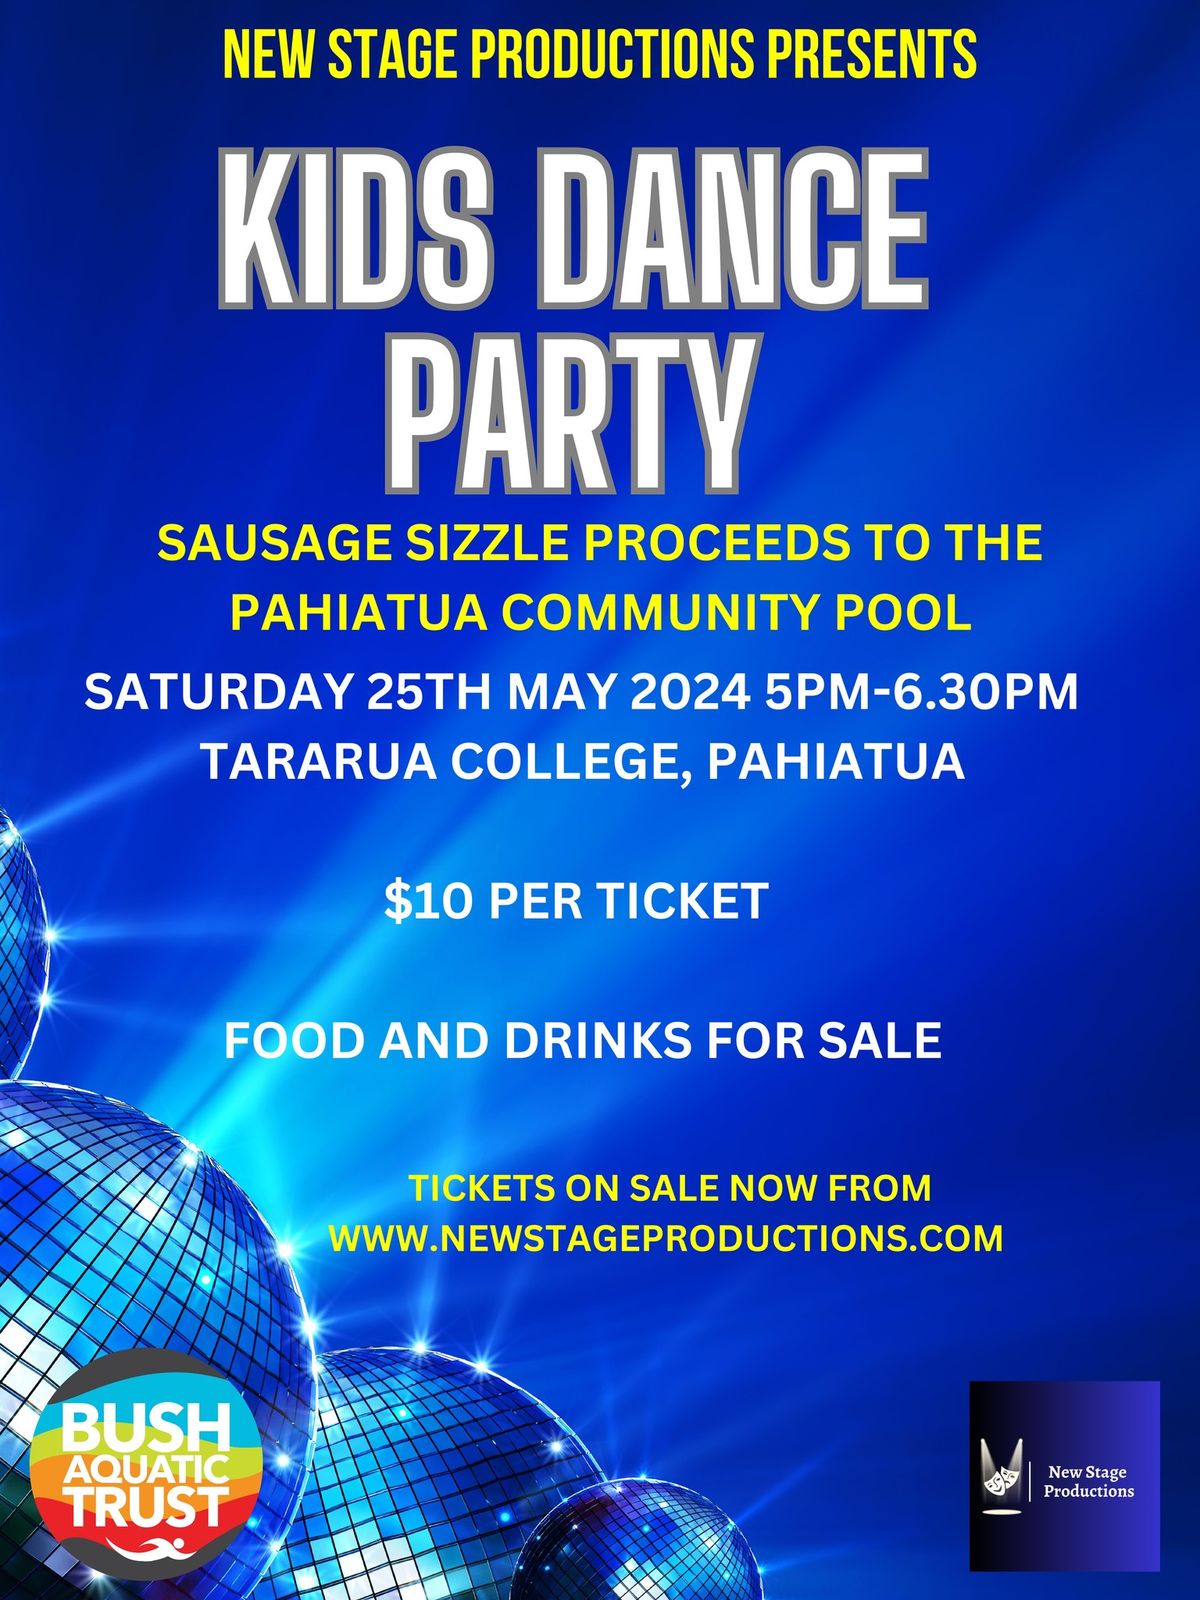 Kids Dance Party - Fundraising for the Pahiatua Community Pool